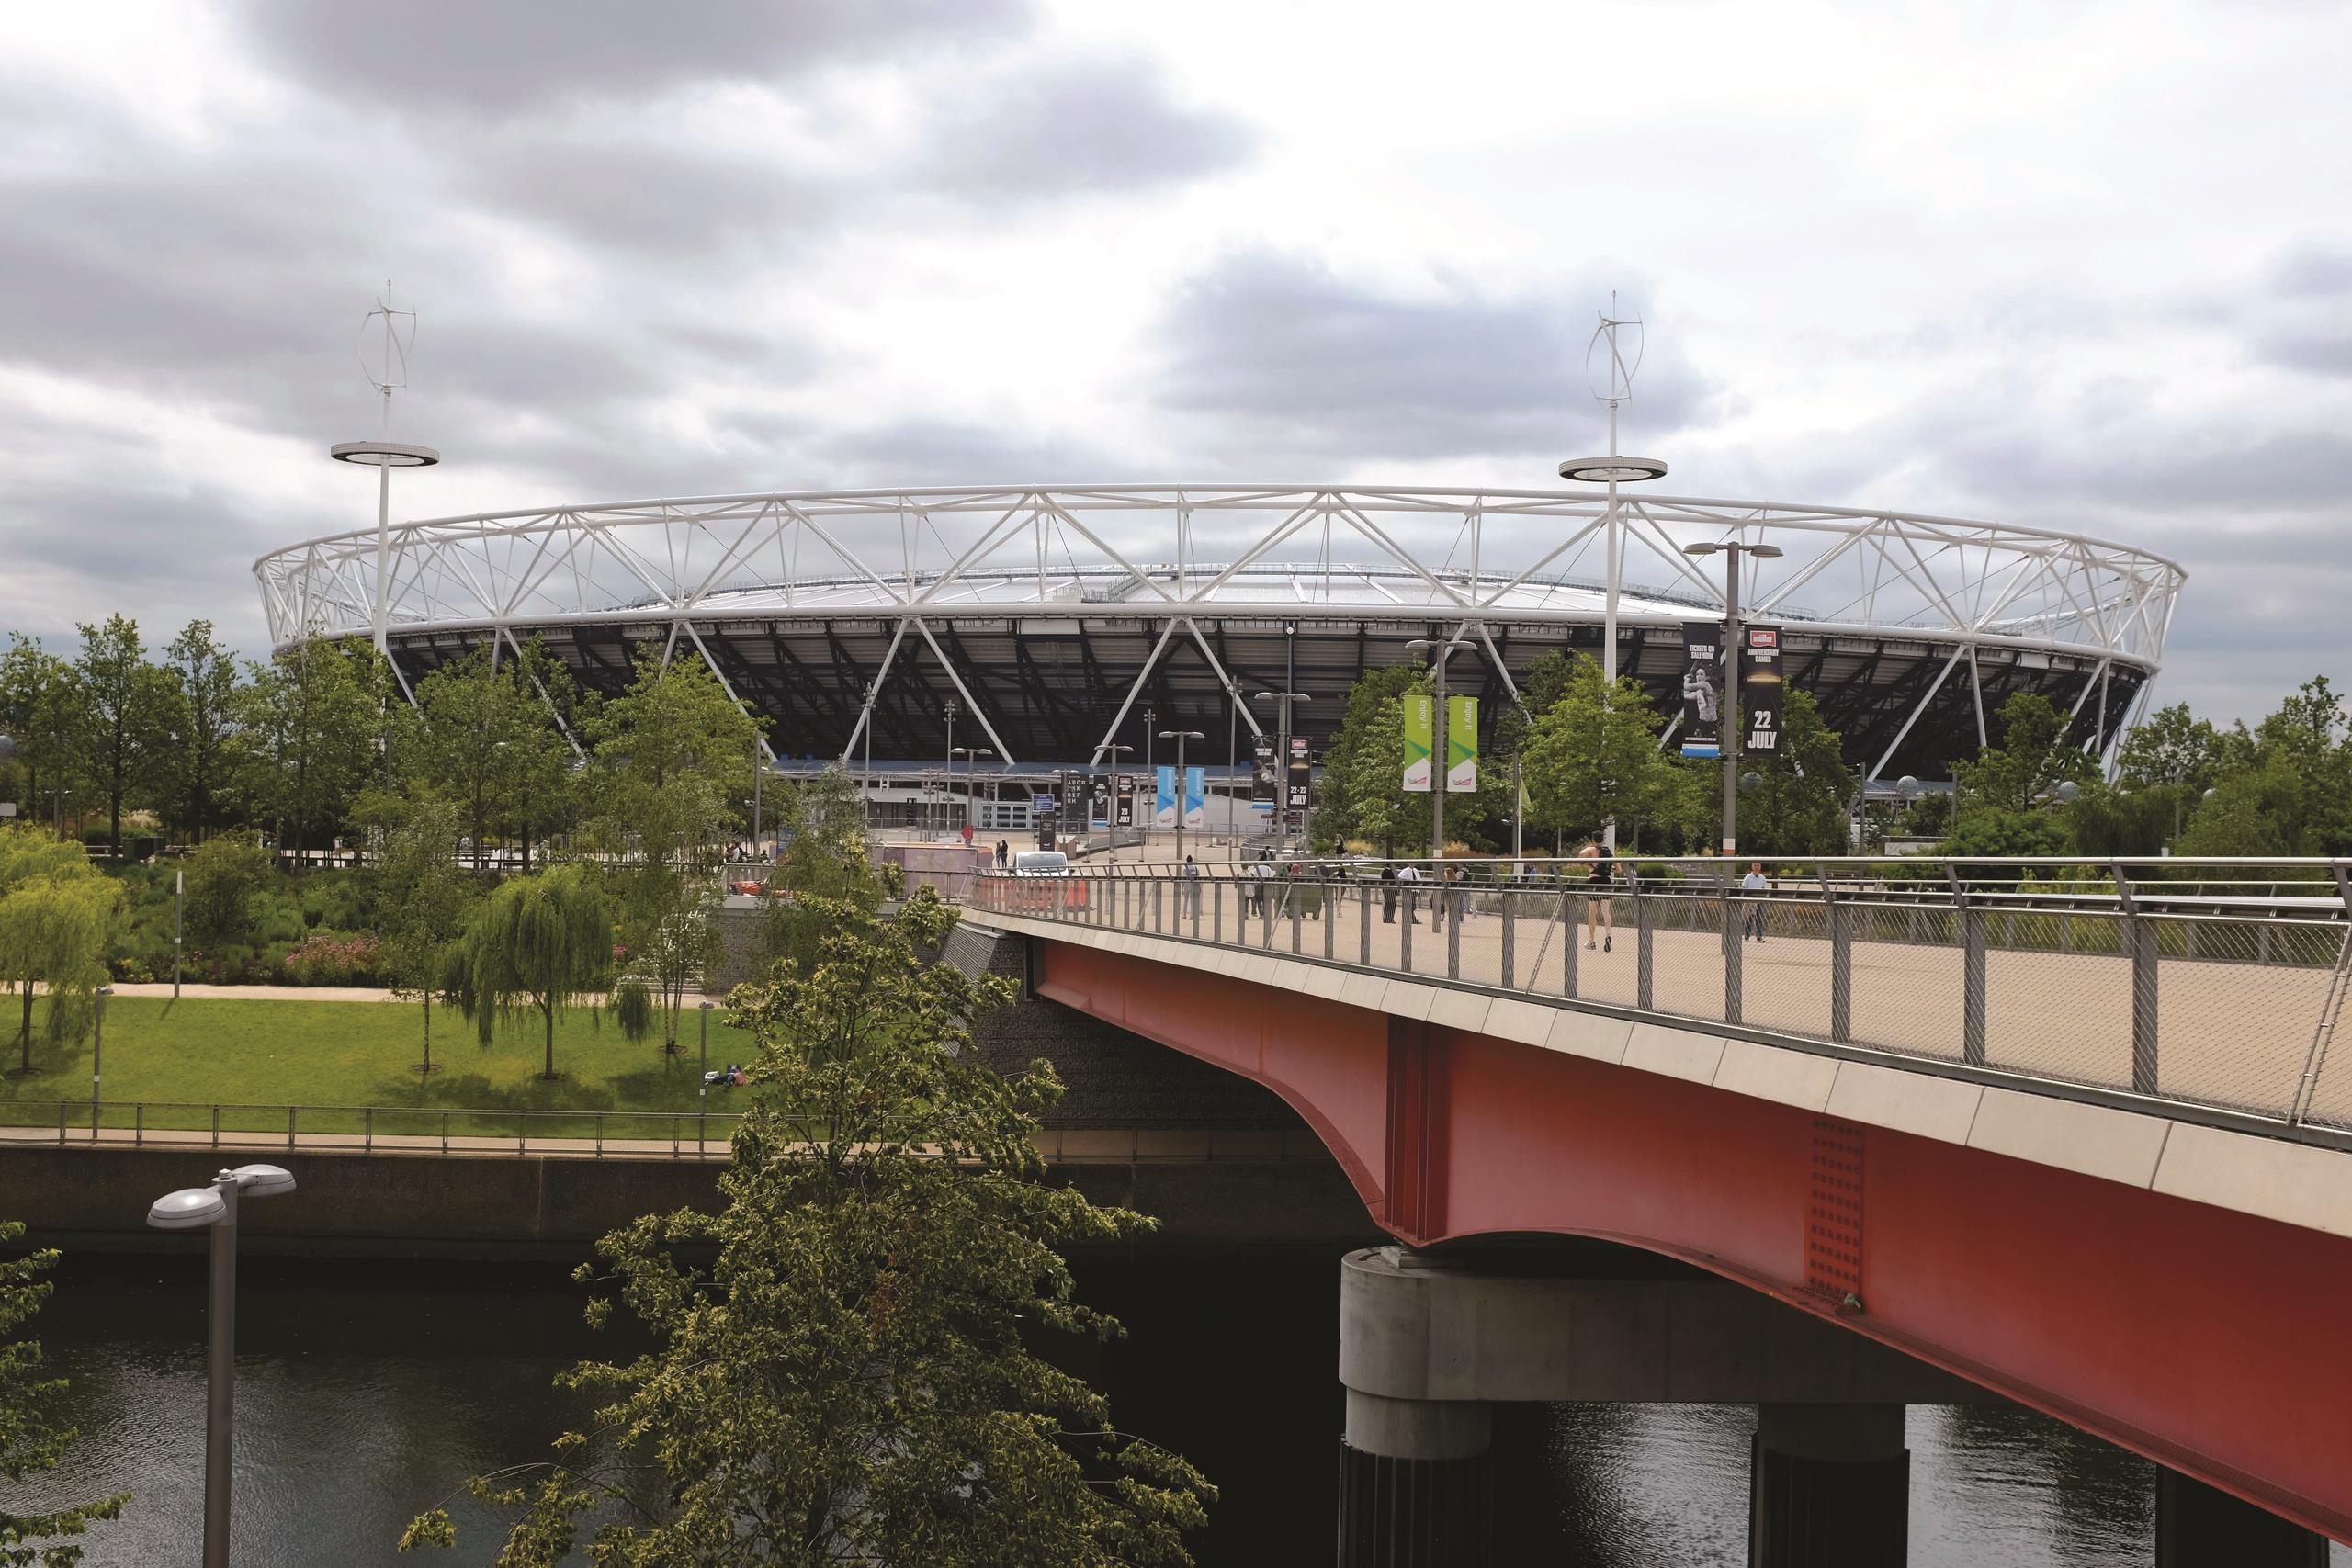 Outside of the London 2012 Olympic Stadium and walkway bridge.